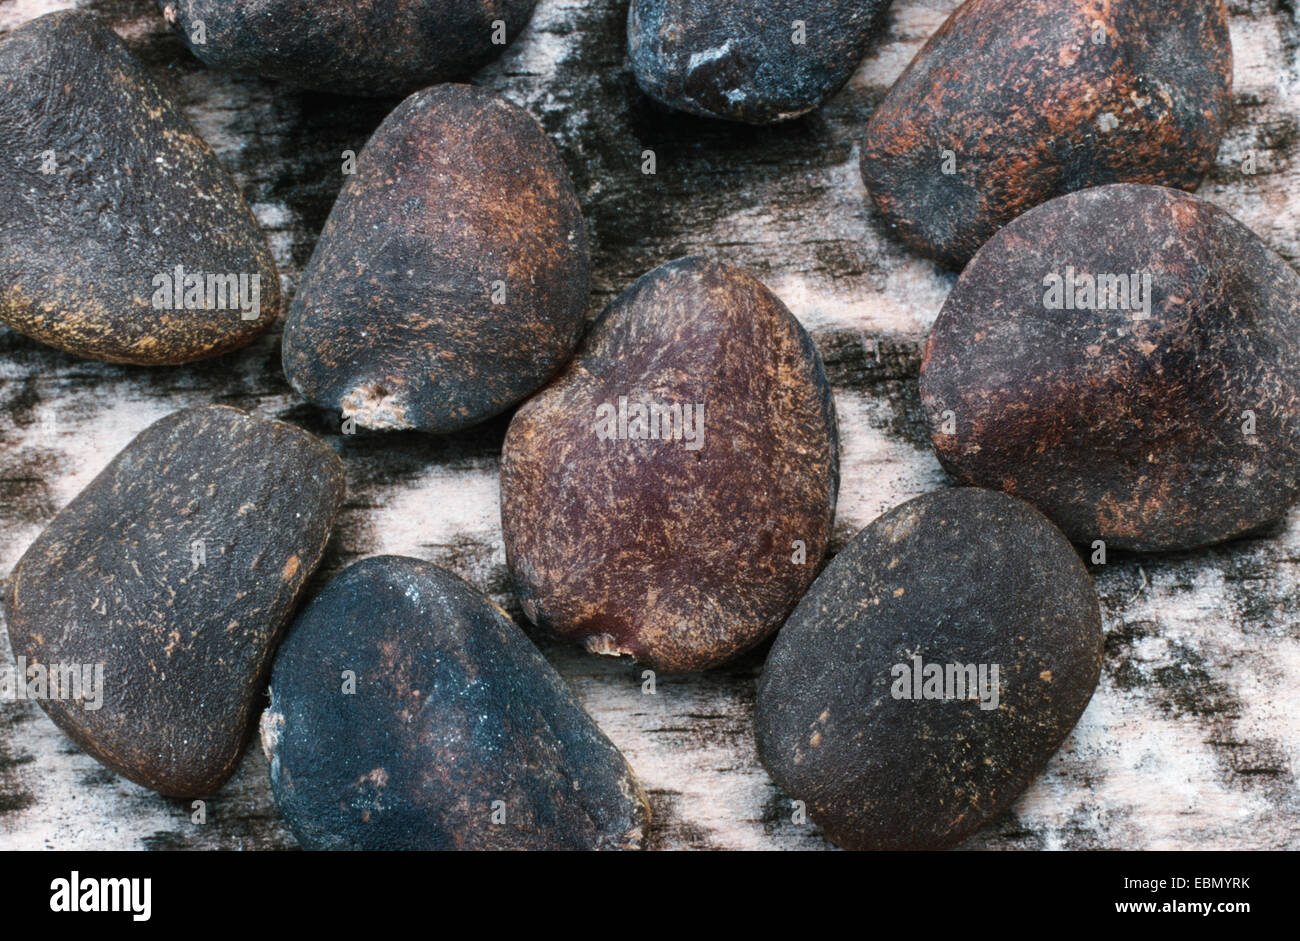 ignatius bean, curare (Strychnos amara, Strychnos ignatii, Strychnos toxifera), seeds Stock Photo